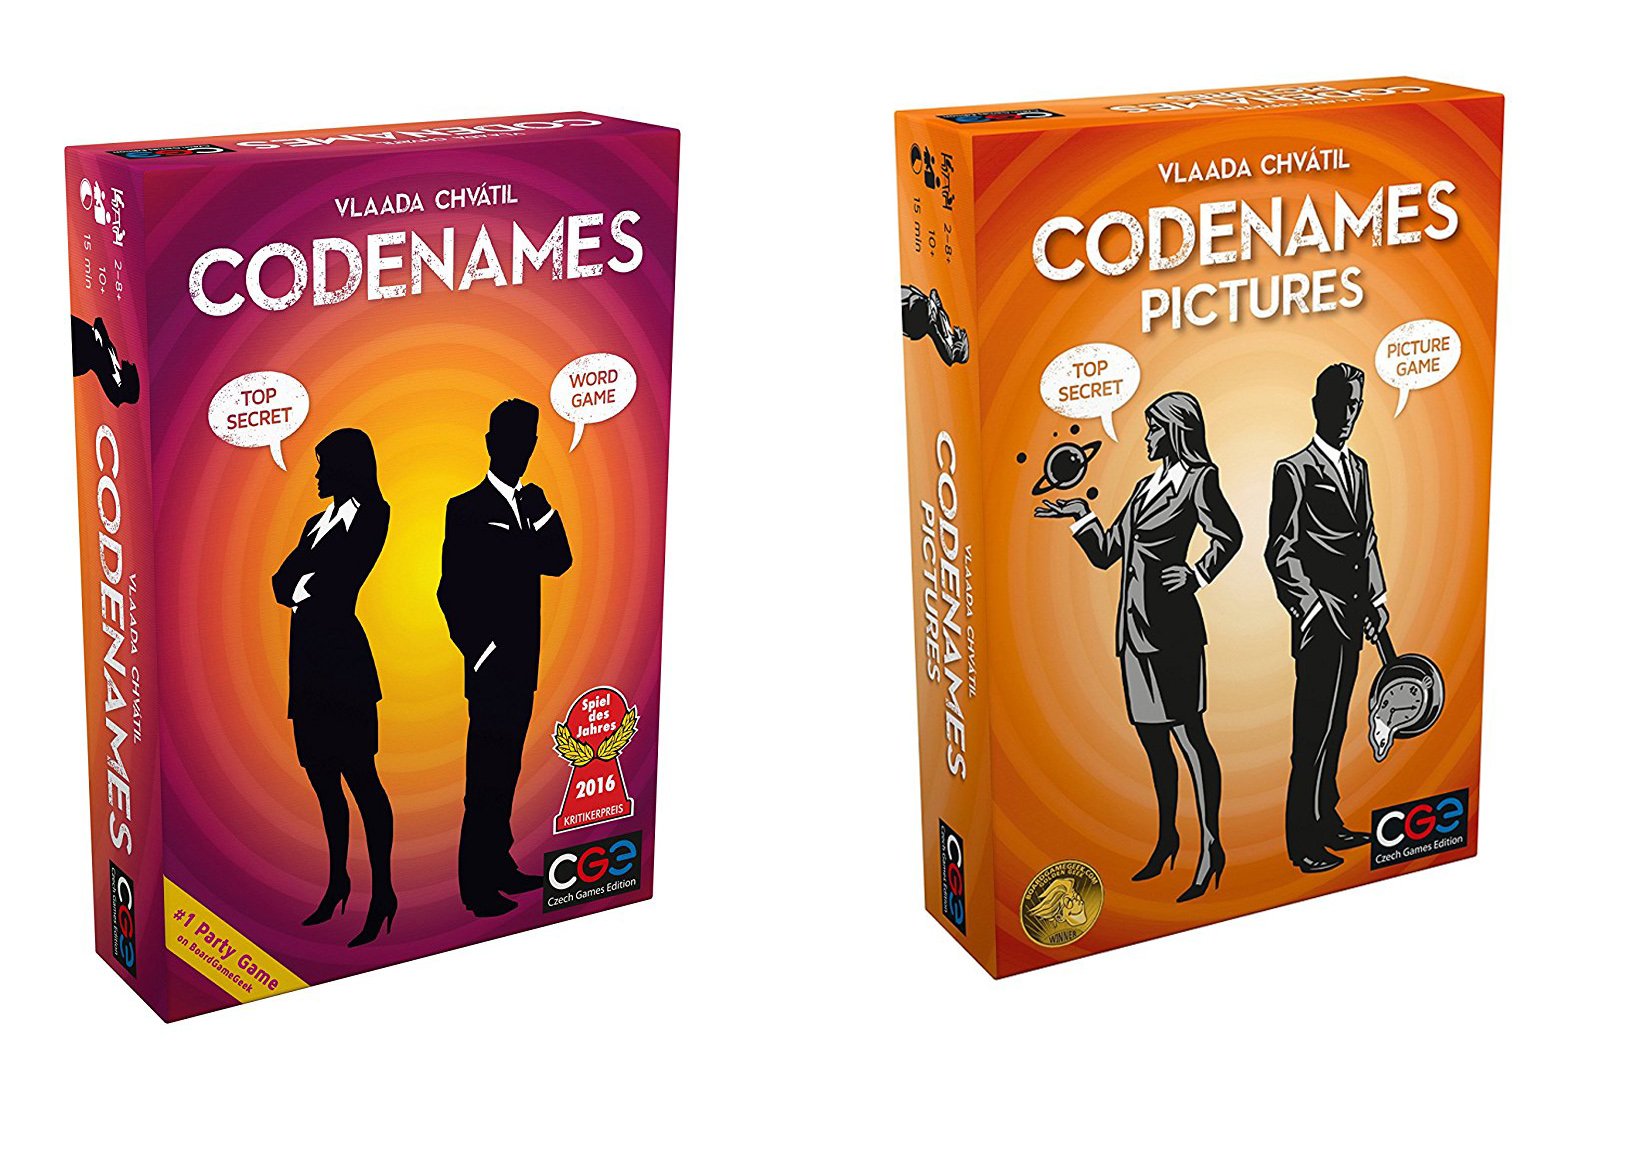 Code name game. Кодовые имена (Codenames). Коднеймс картинки. Игра Codename. Настольная игра кодовые имена.